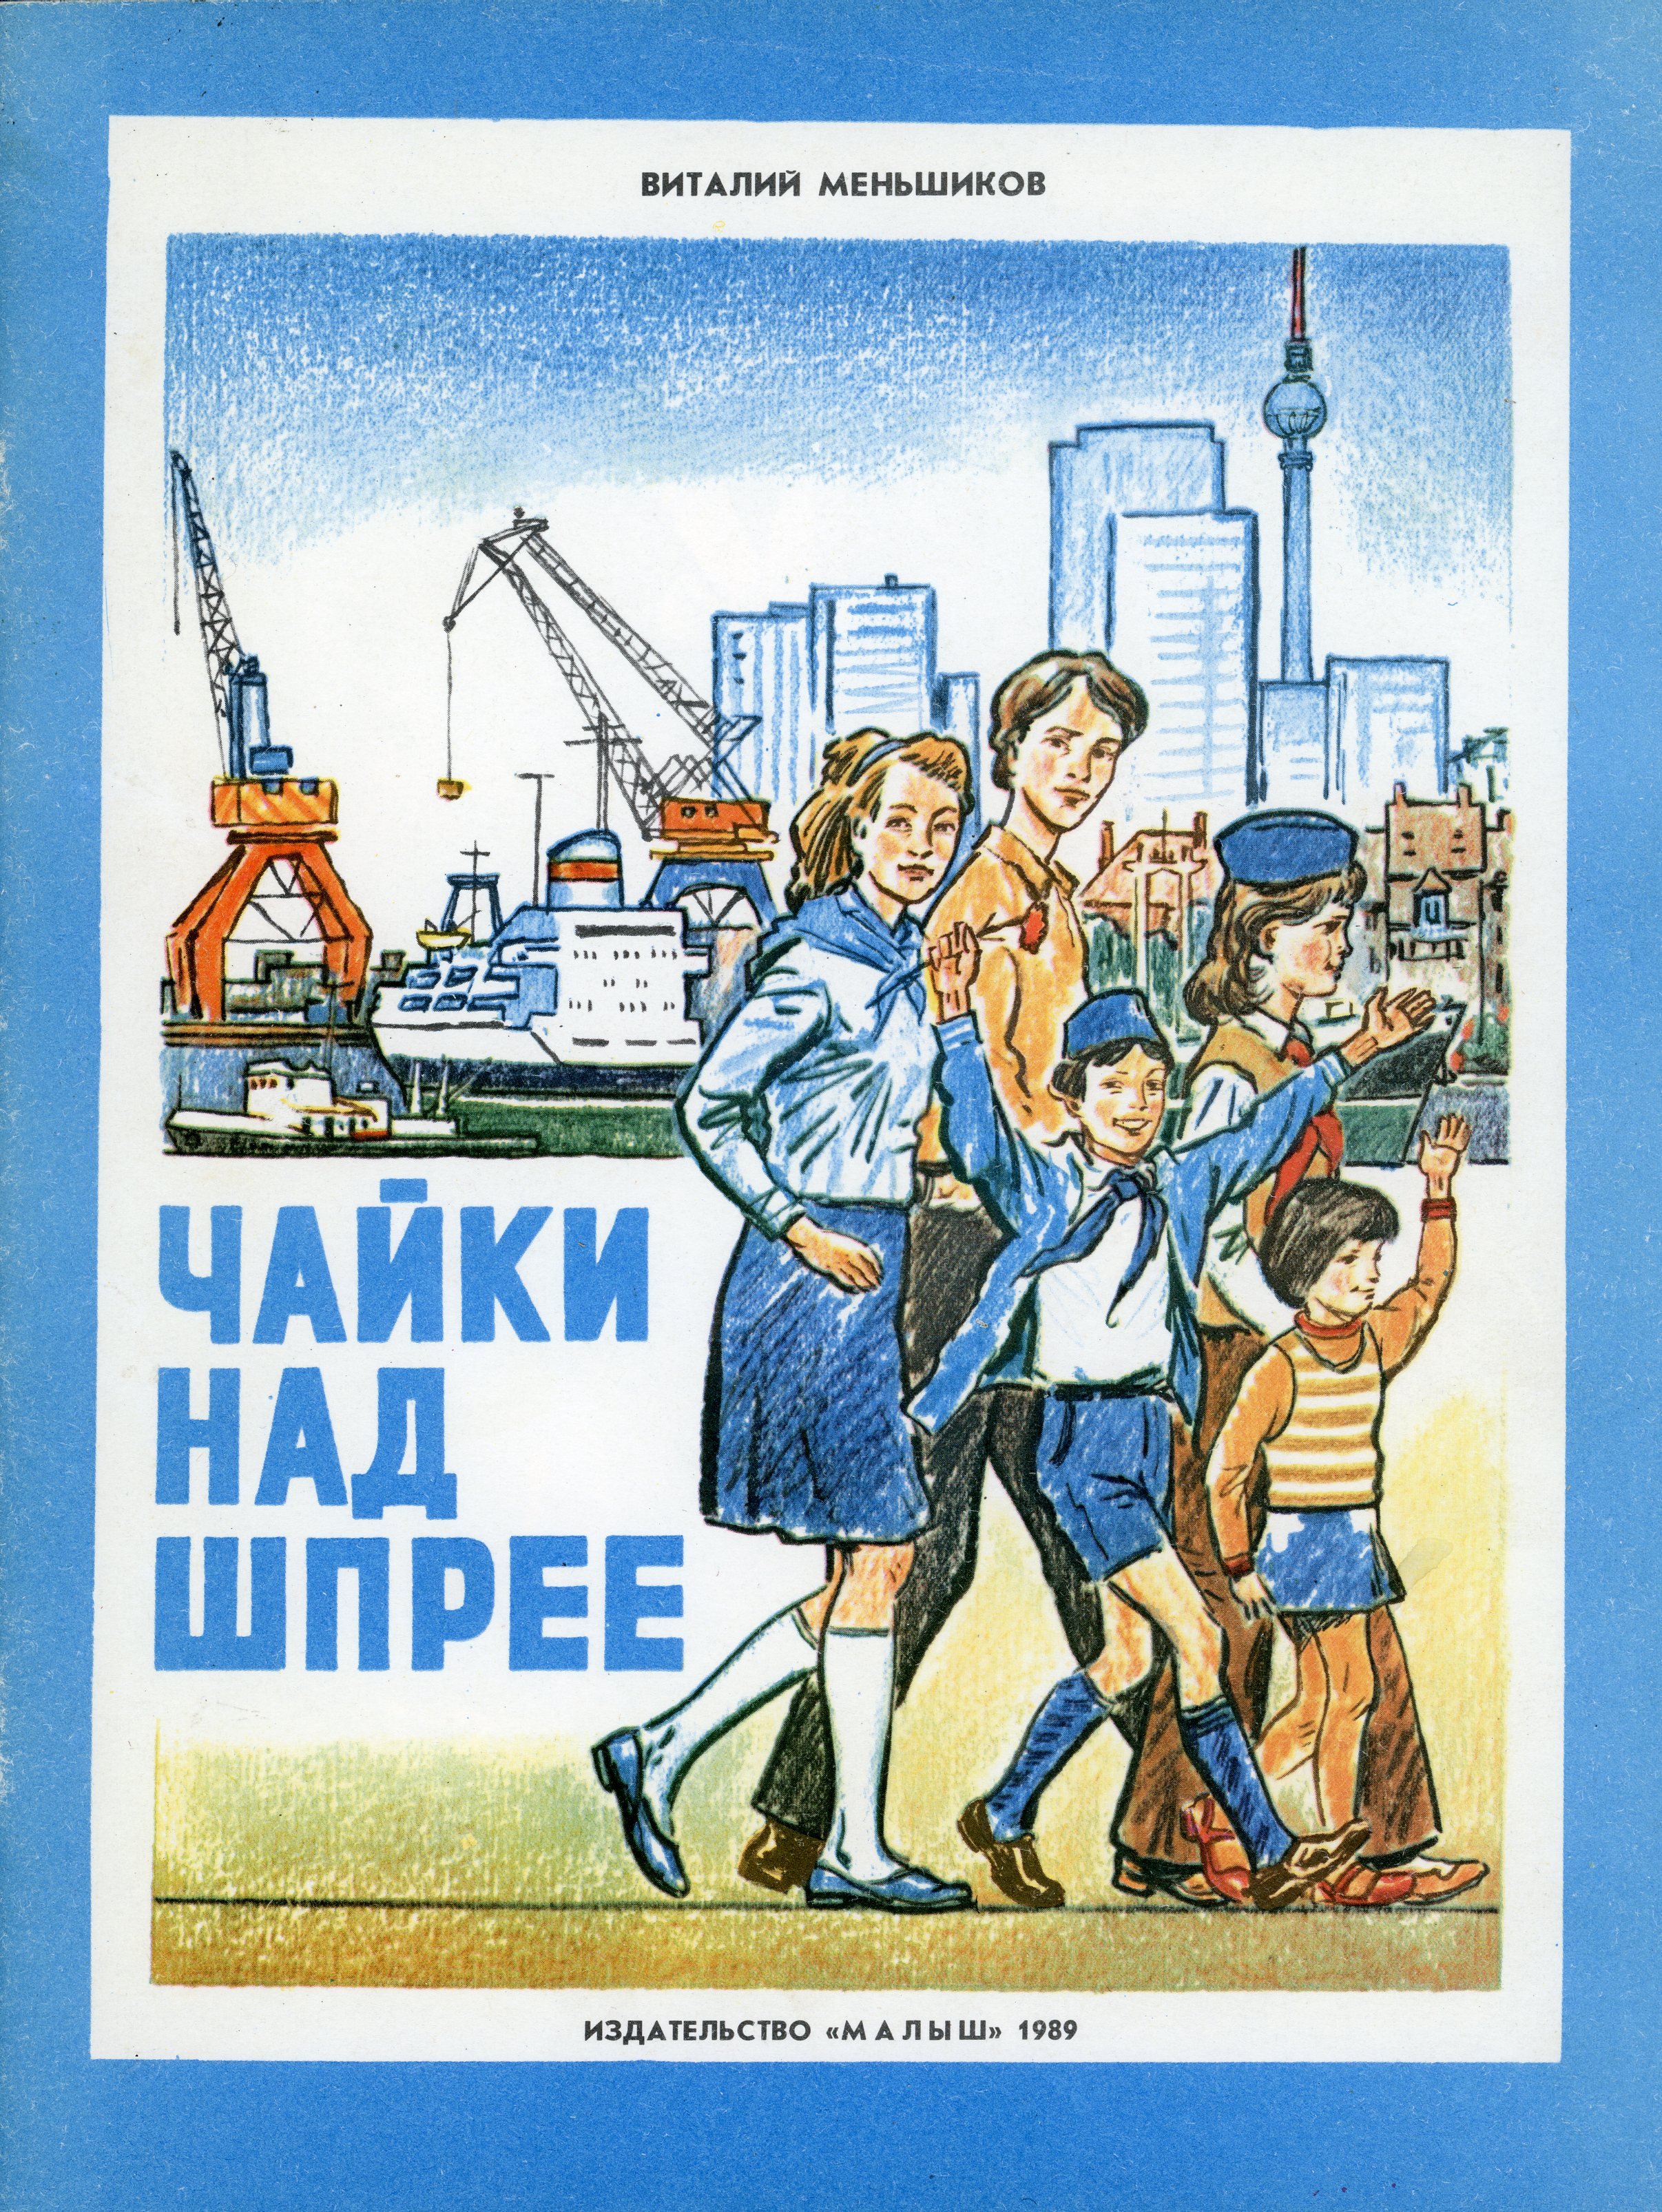 Kinderbuch "Möwen über Spree", Vitalij Menschikow, Moskau: "Malysch", 1989 (Museum Berlin-Karlshorst CC BY-NC-SA)